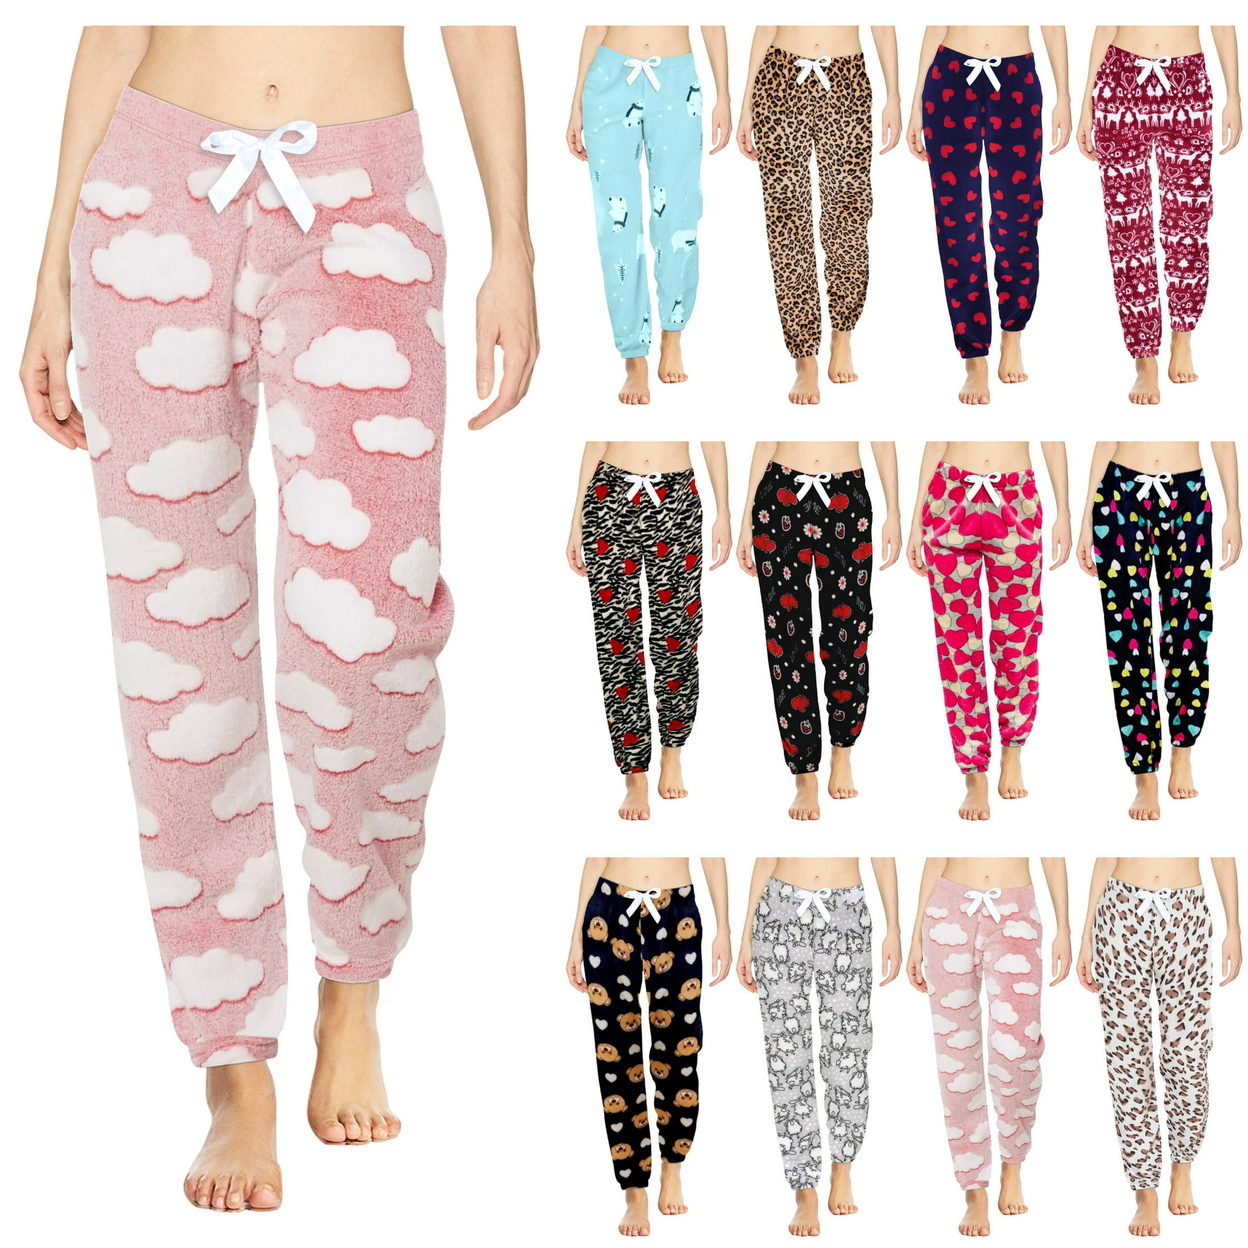 4-Pack: Women's Solid & Printed Ultra-Soft Comfy Stretch Micro-Fleece Pajama Lounge Pants - Medium, Animal